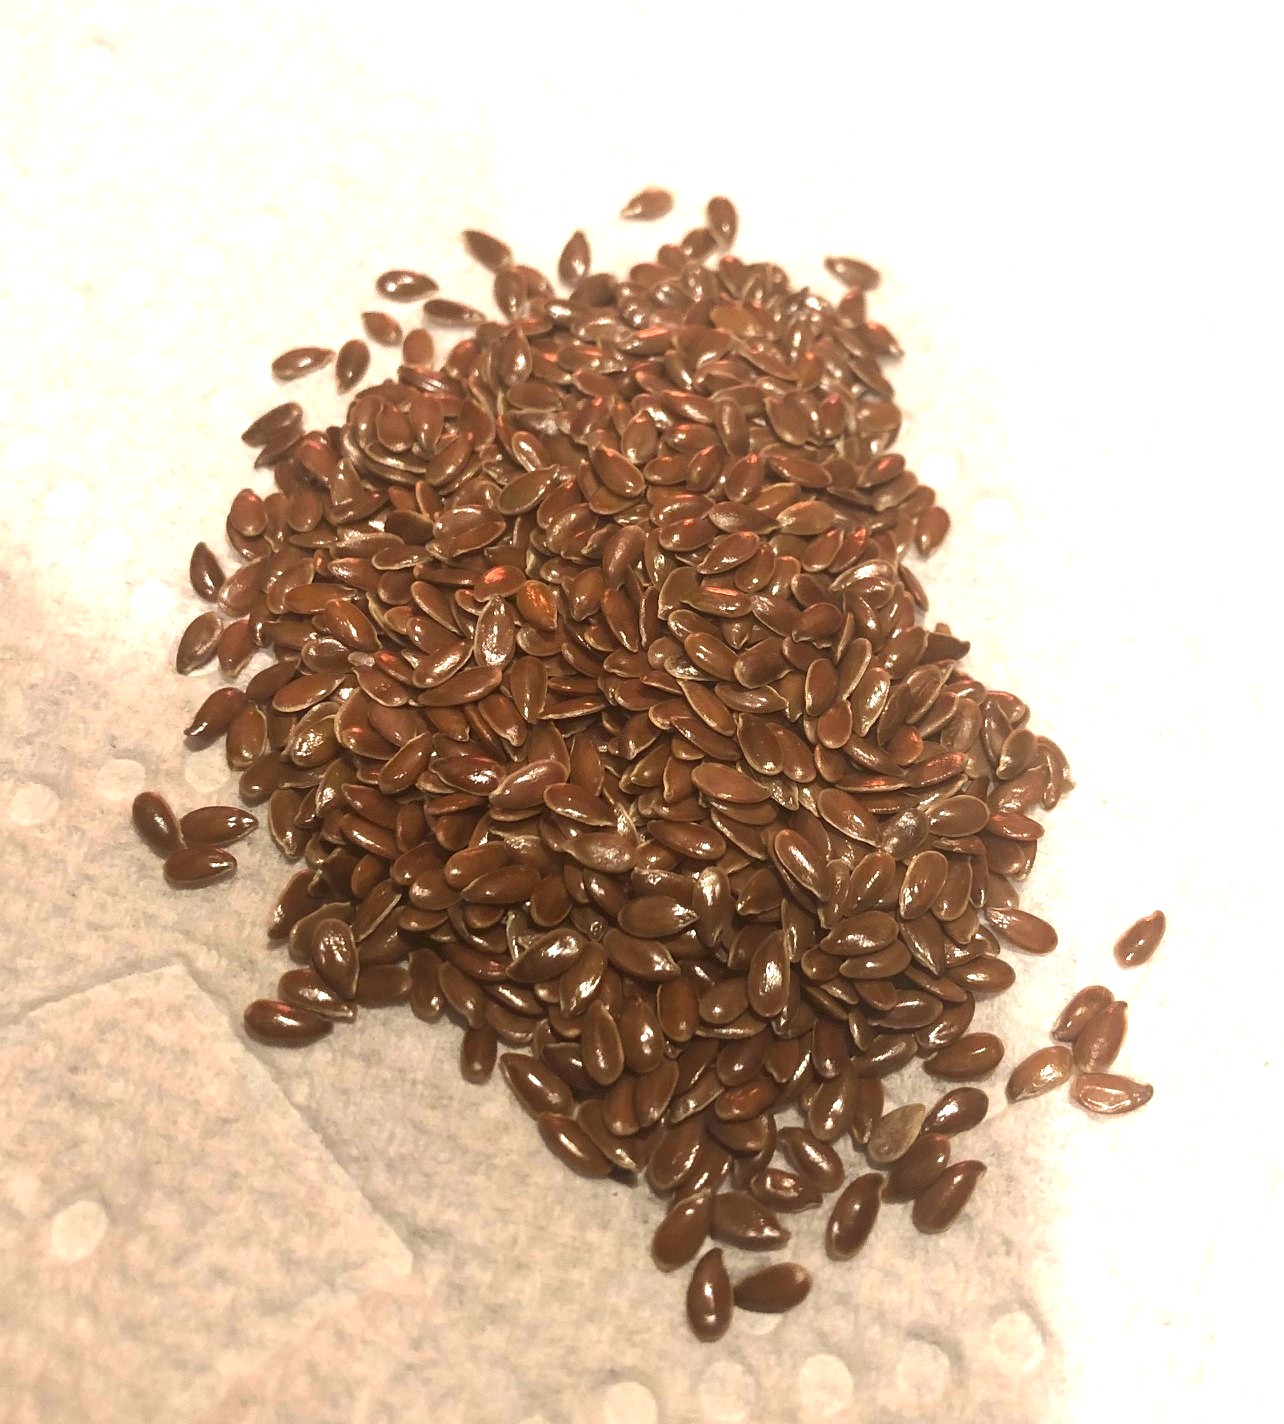 Brown Organic Flax Seeds on White Towel